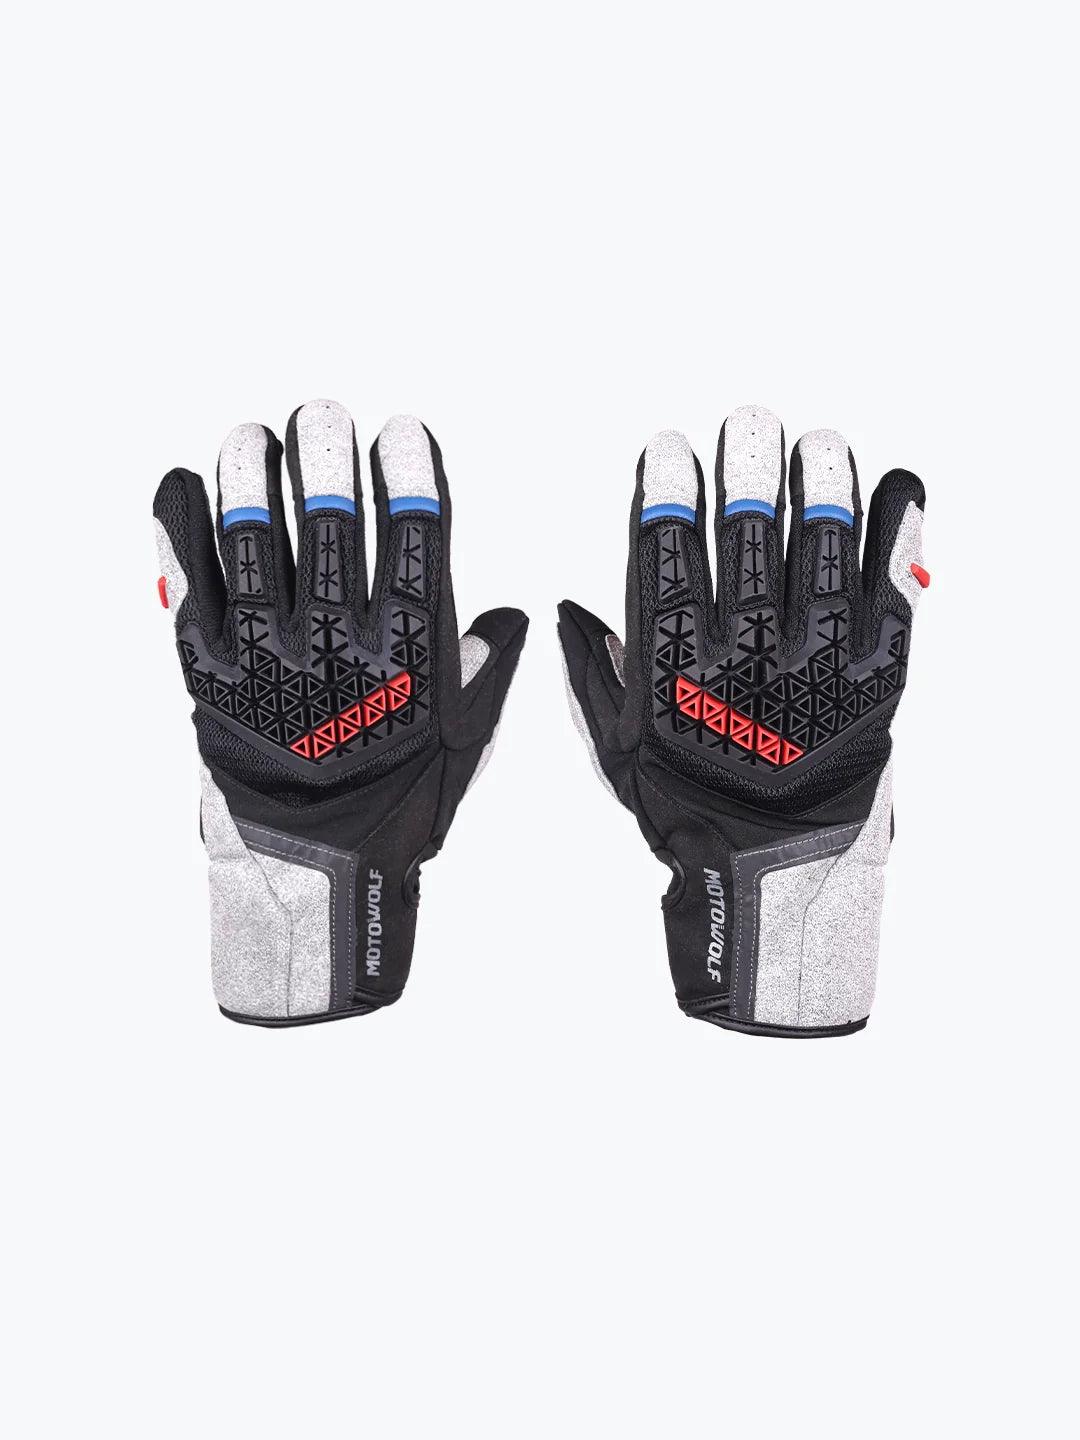 Motowolf Gloves Grey 0338 - Moto Modz